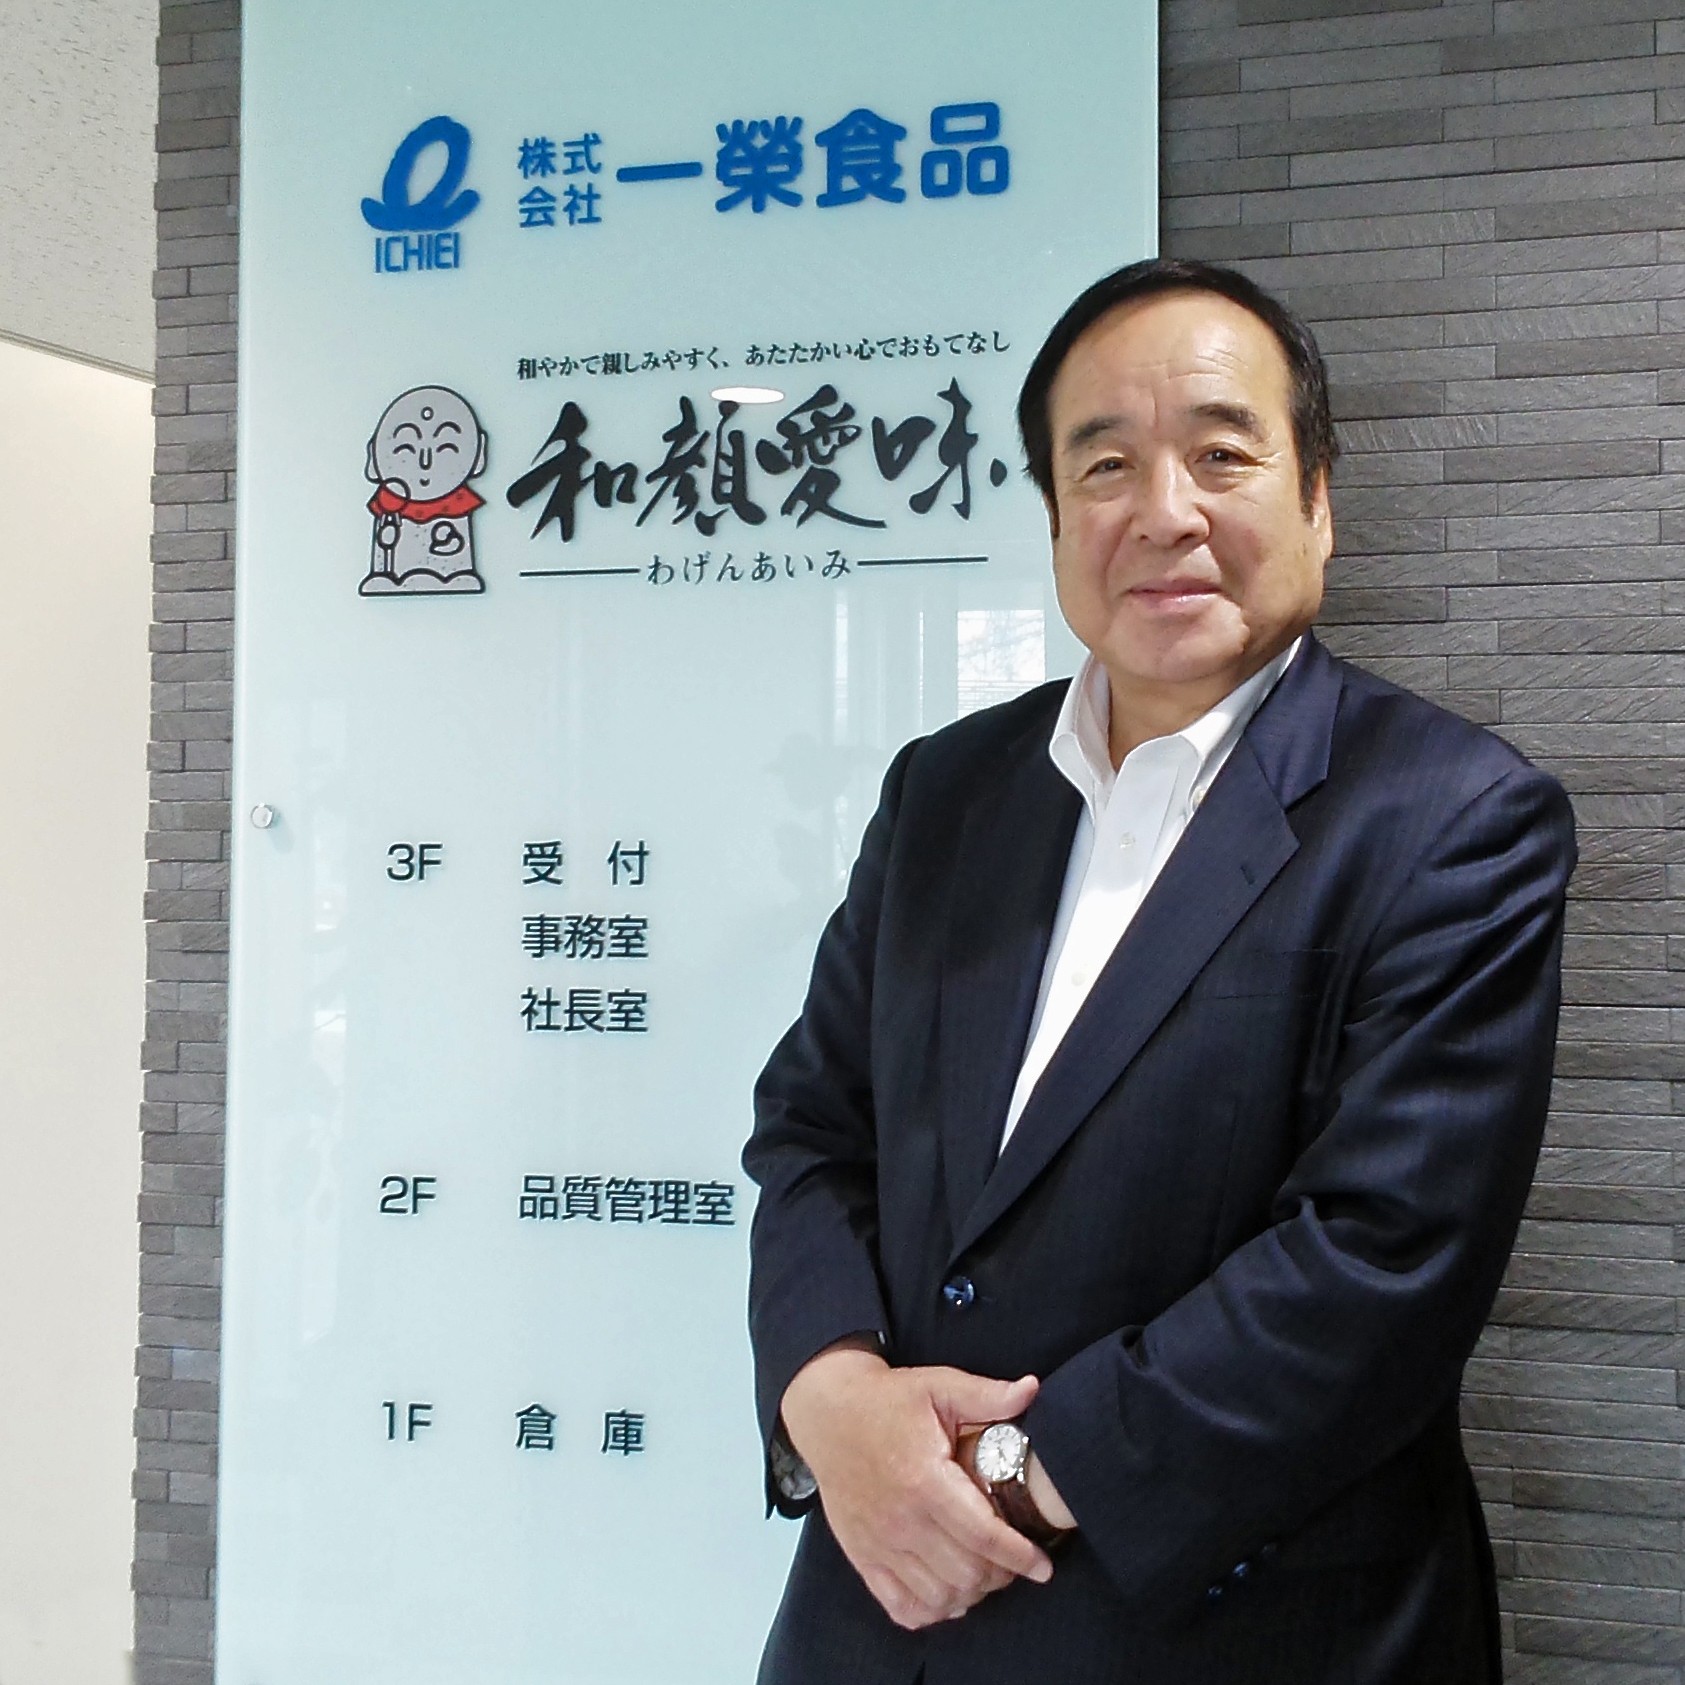 Eiichi Ikeda, founder and president